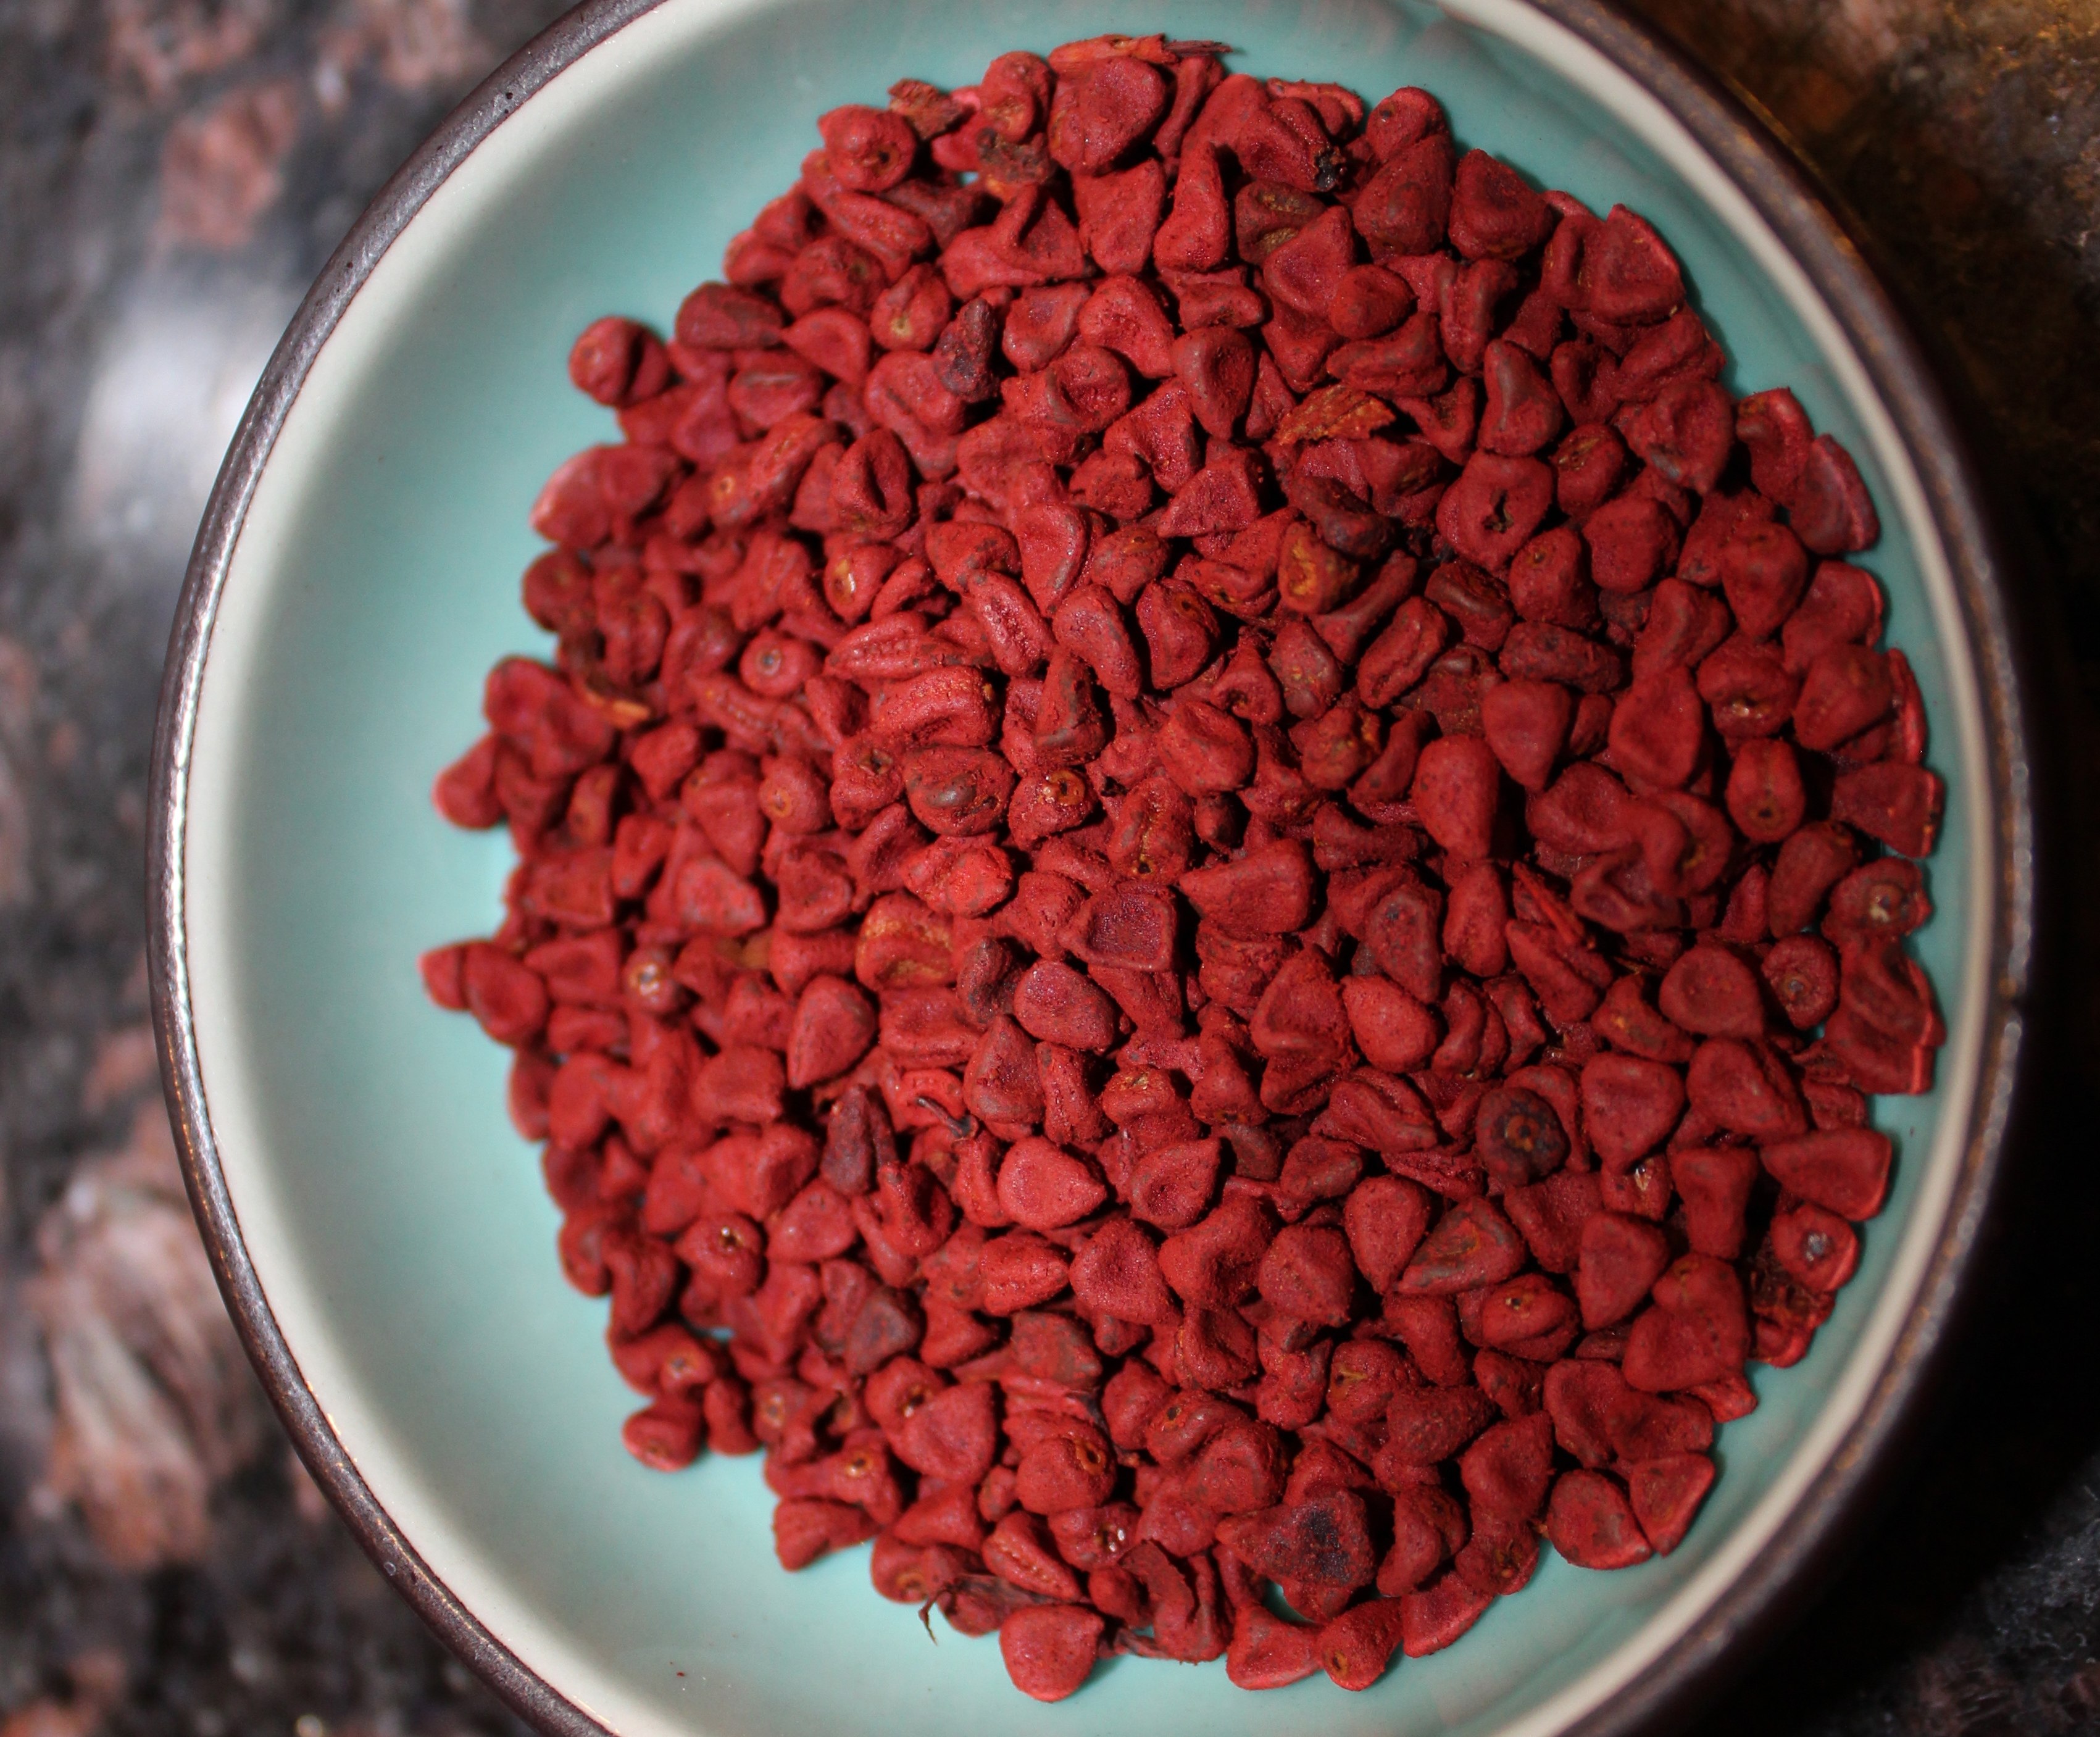 Cooking with bija – using annatto seeds